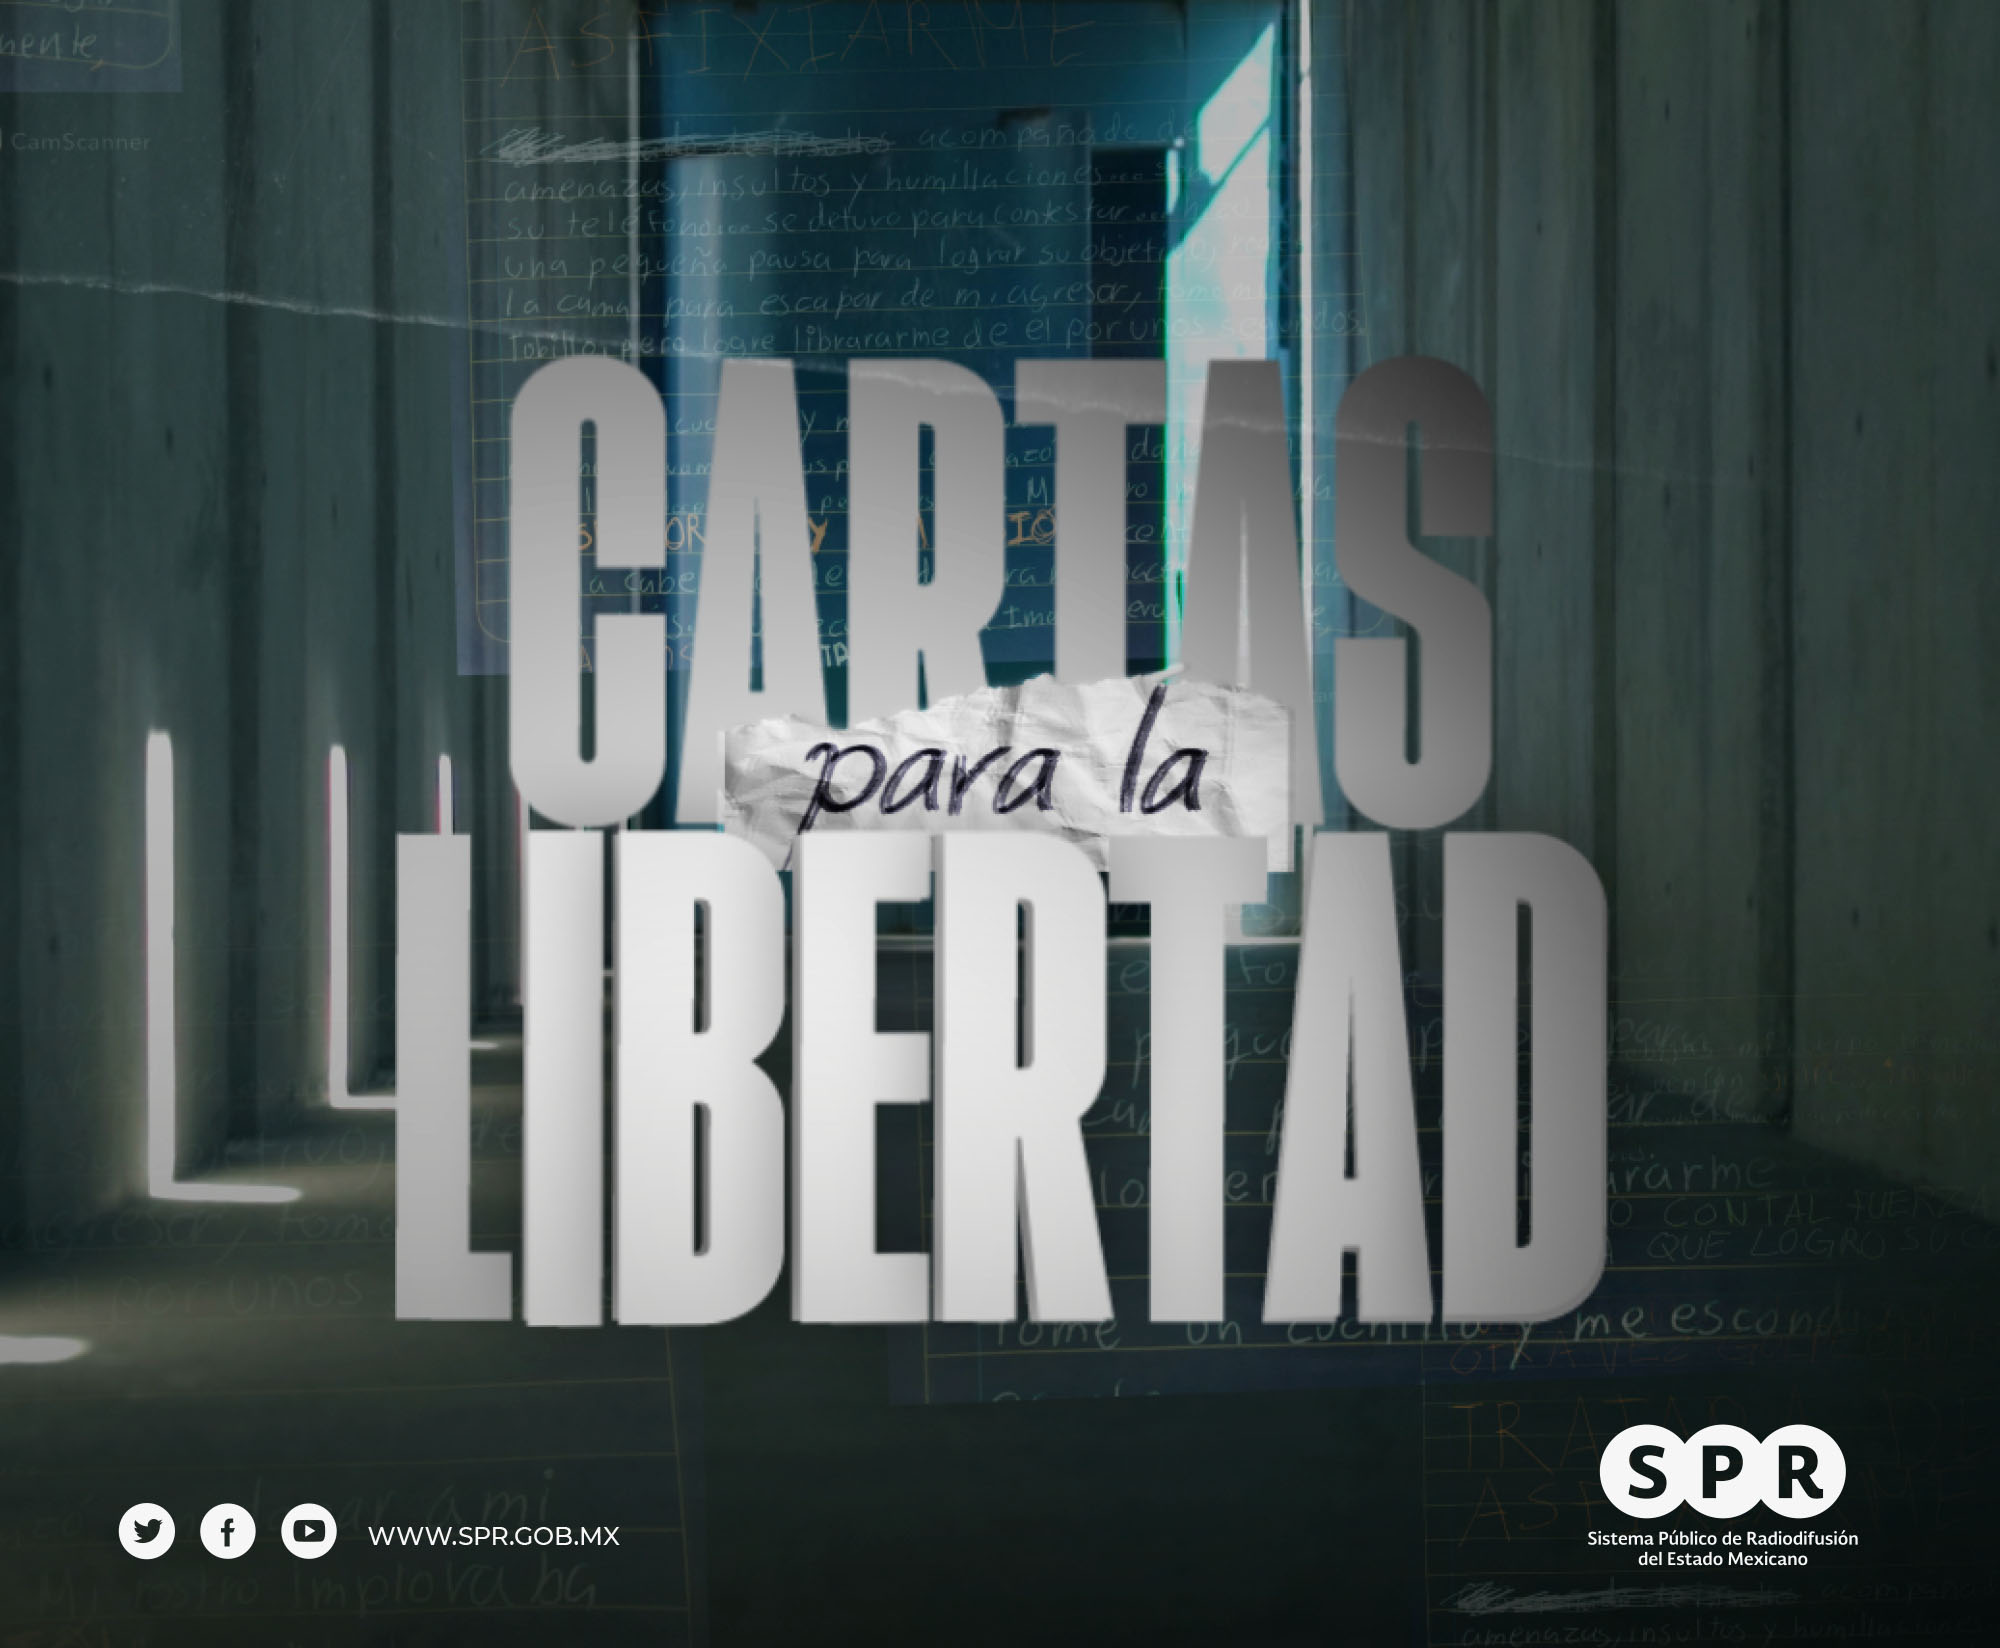 <i>Canal Catorce</i> del SPR estrena este sábado 25 de marzo la serie <b>“Cartas para la libertad”</b>